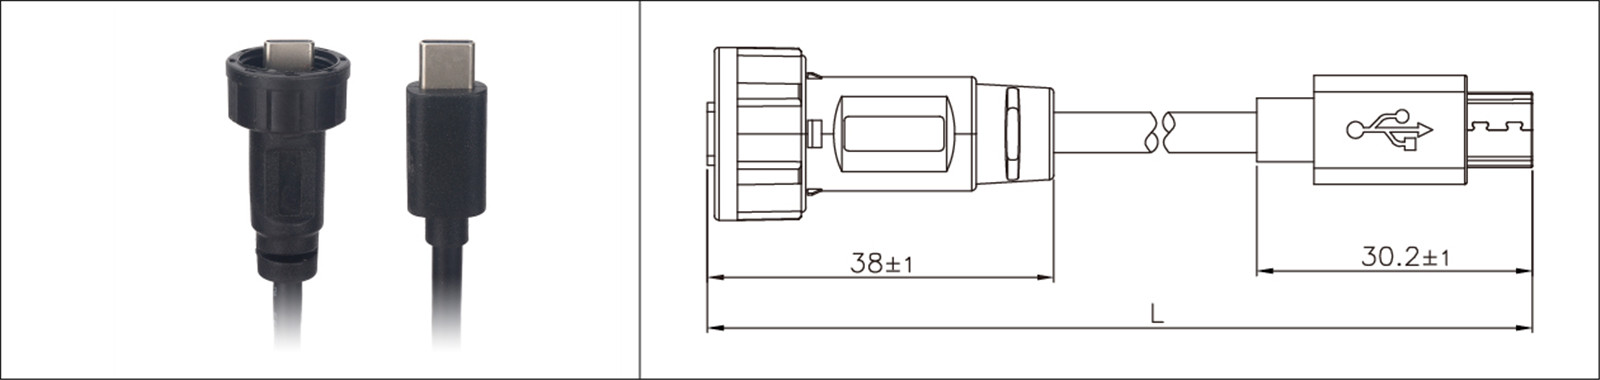 Micro USB tipo de montagem em painel 2.0 3.0 fêmea e macho à prova d'água IP67 cabo de extensão overmold industrial connecto-02 (14)